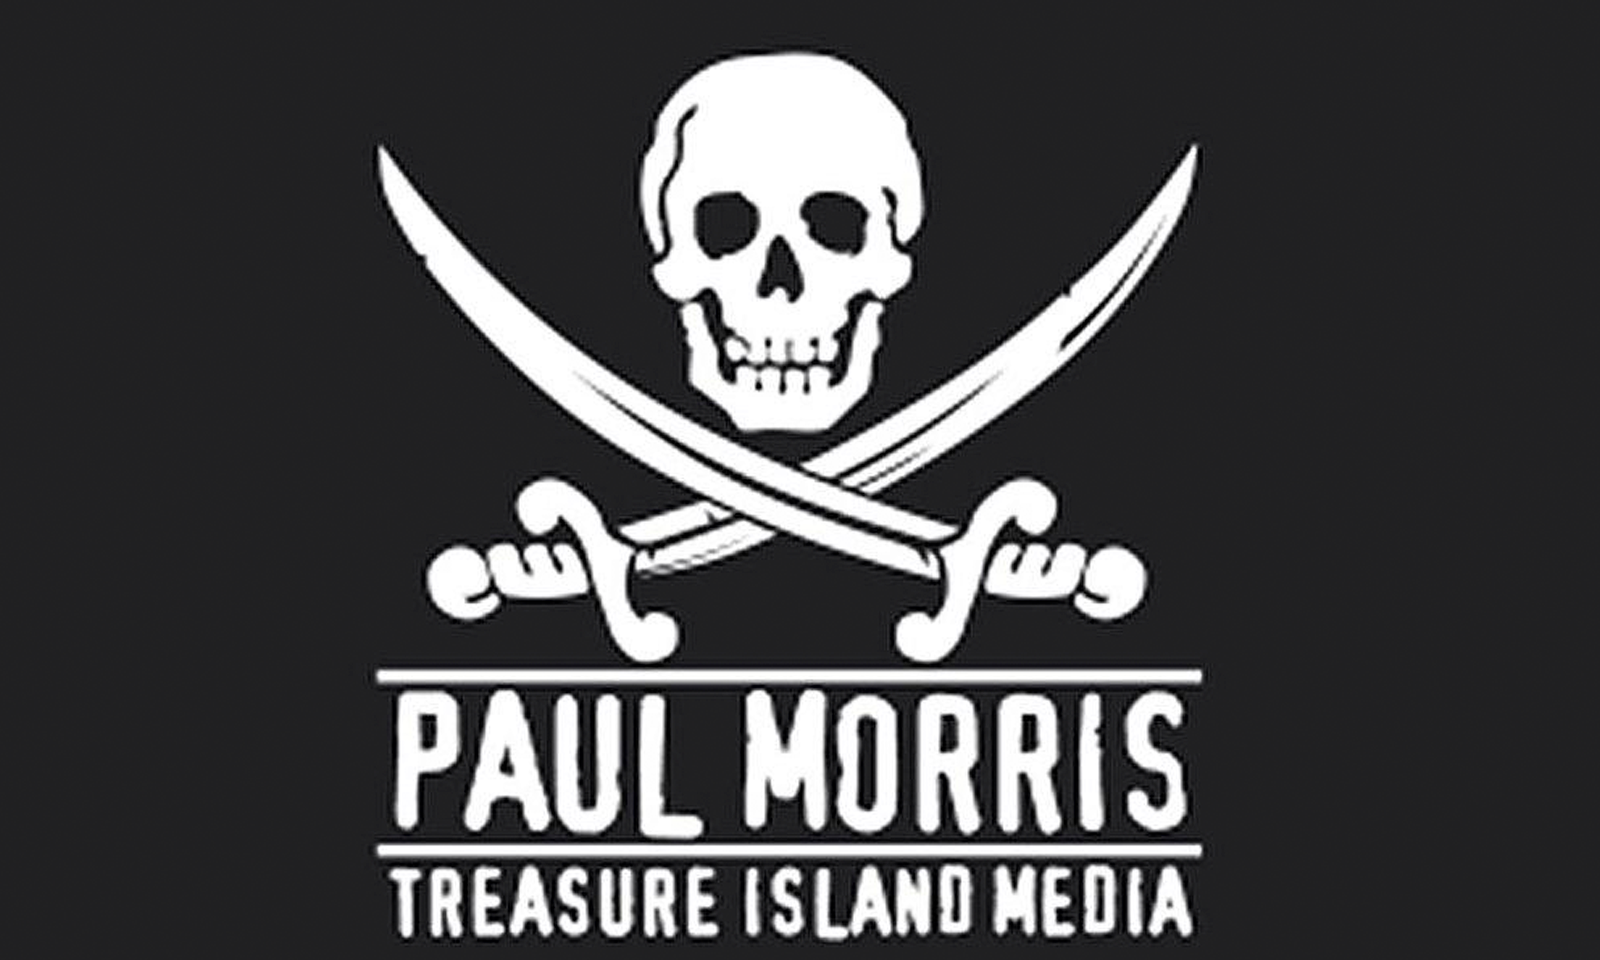 Treasure Island Bows Newest Film, ‘Fuck Me, Bro!’